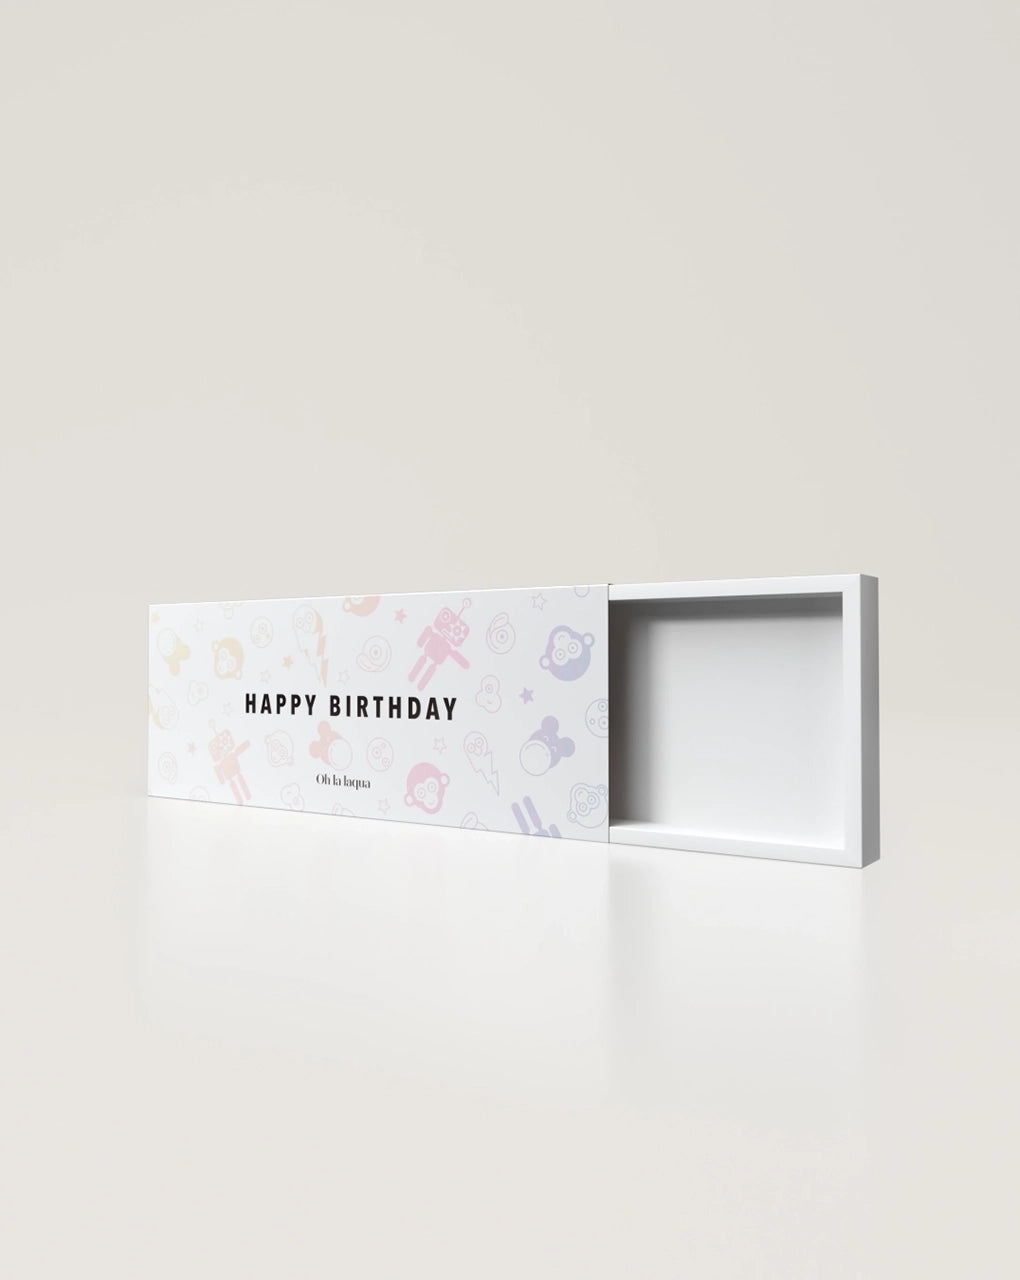 Gift box for children for their birthday ᛫ Happy Birthday (empty)